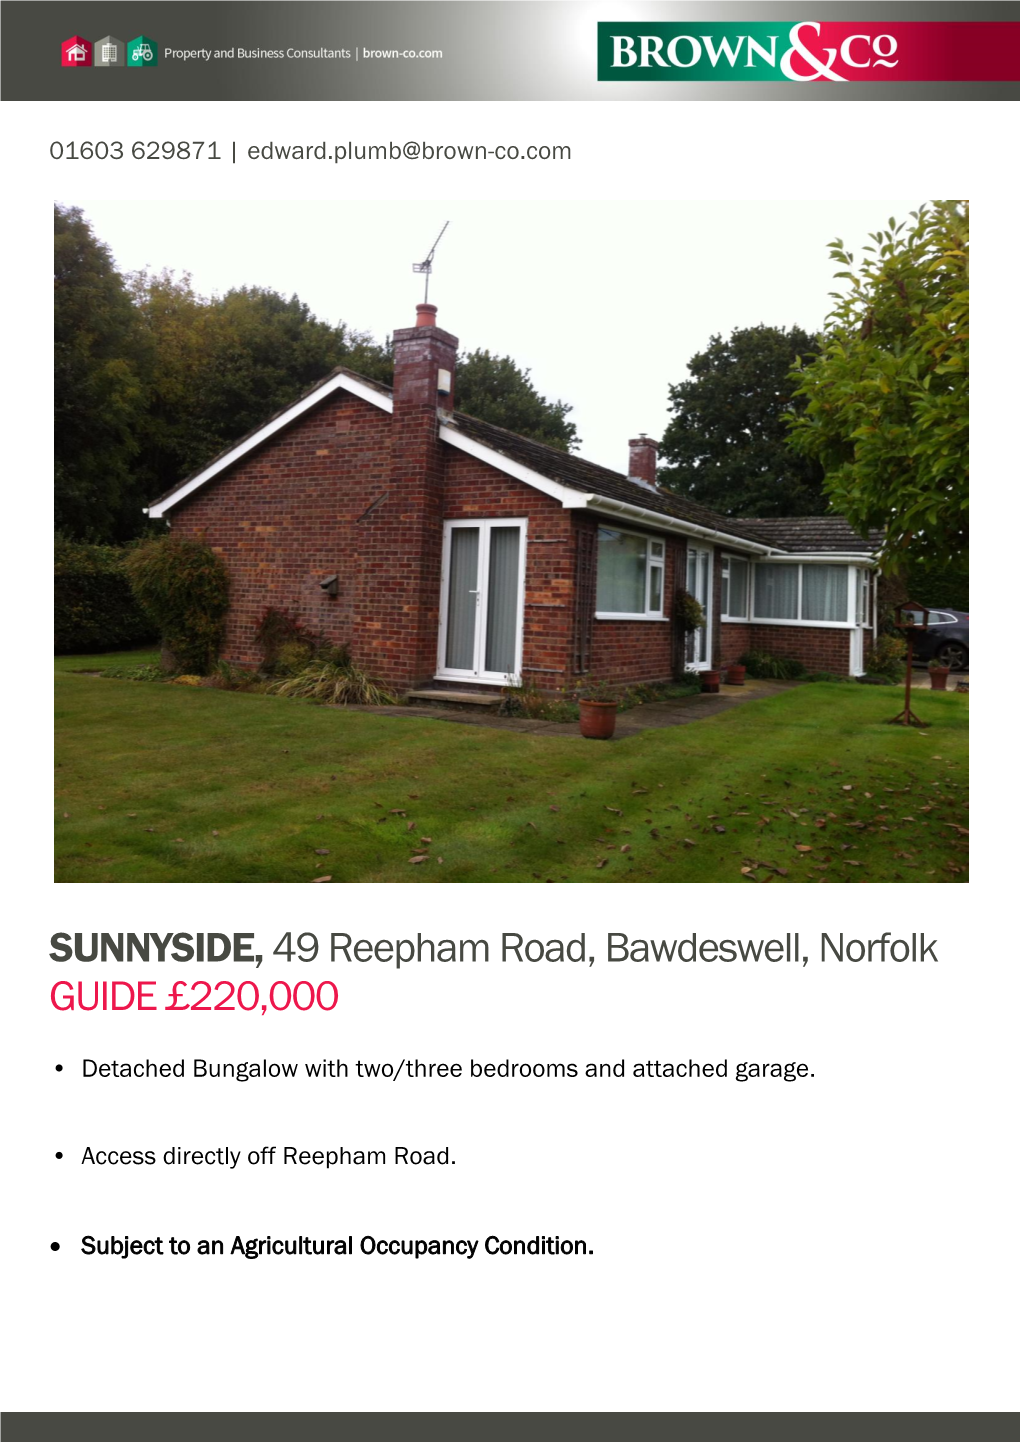 SUNNYSIDE, 49 Reepham Road, Bawdeswell, Norfolk GUIDE £220,000